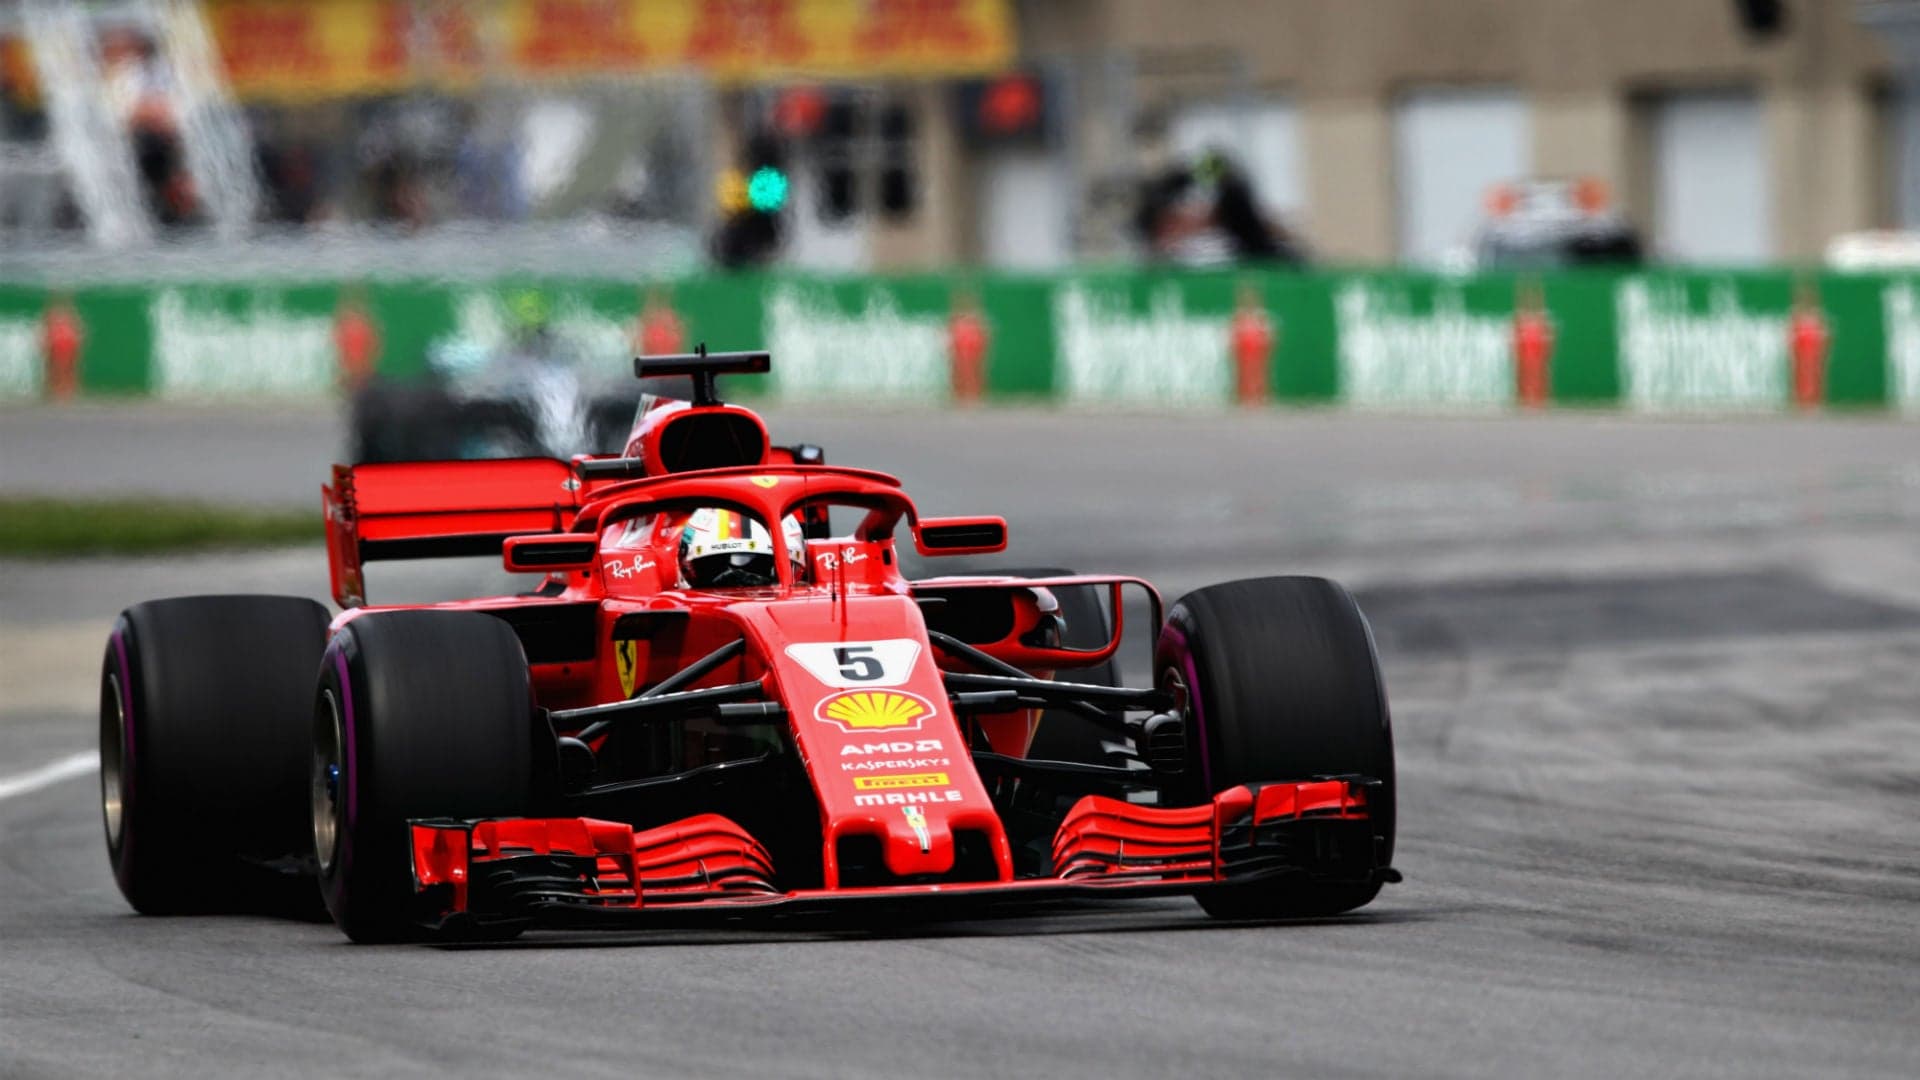 Sebastian Vettel Dominates 2018 Canadian Grand Prix From Pole to Take Championship Lead